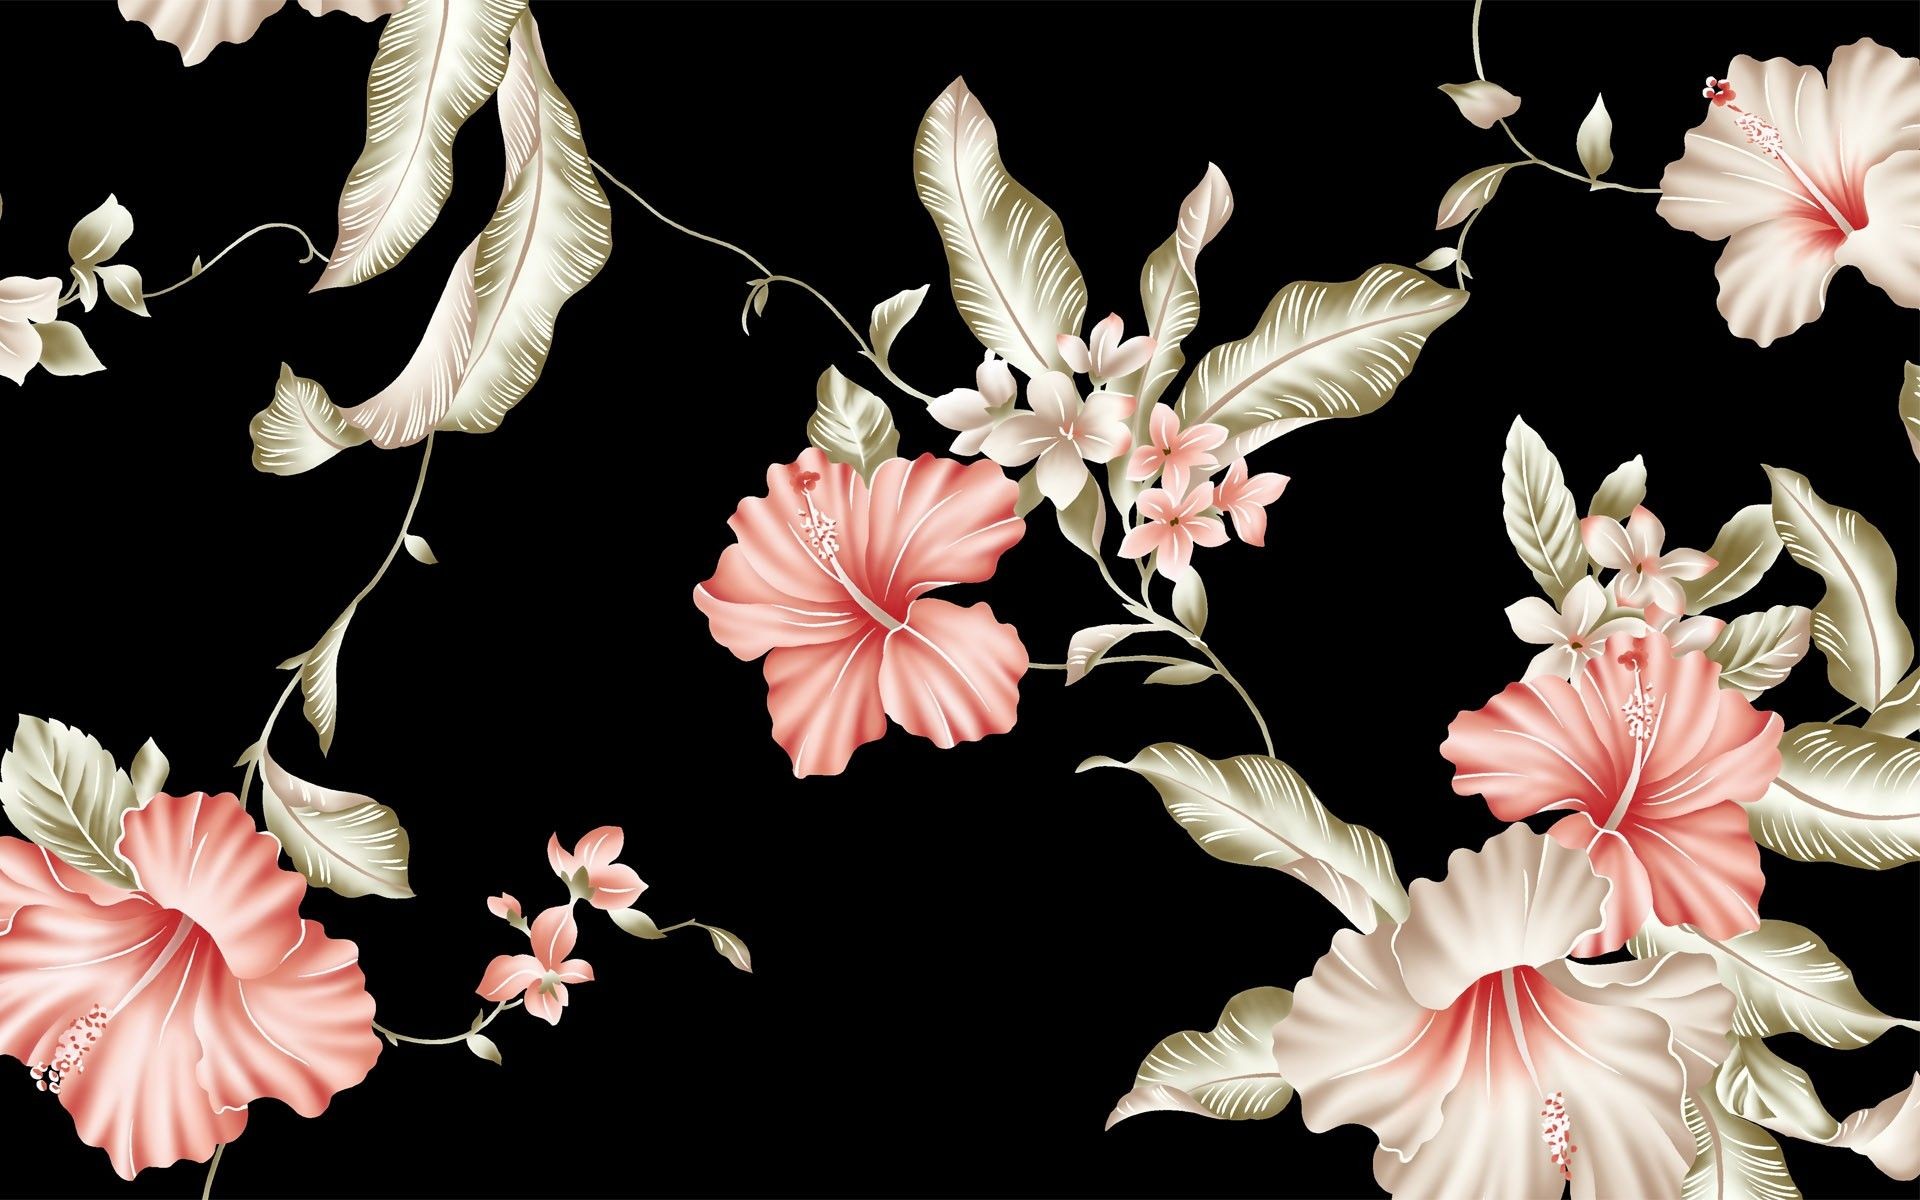 Vintage Flowers Wallpaper Full HD Desktop Image Amazing 4k